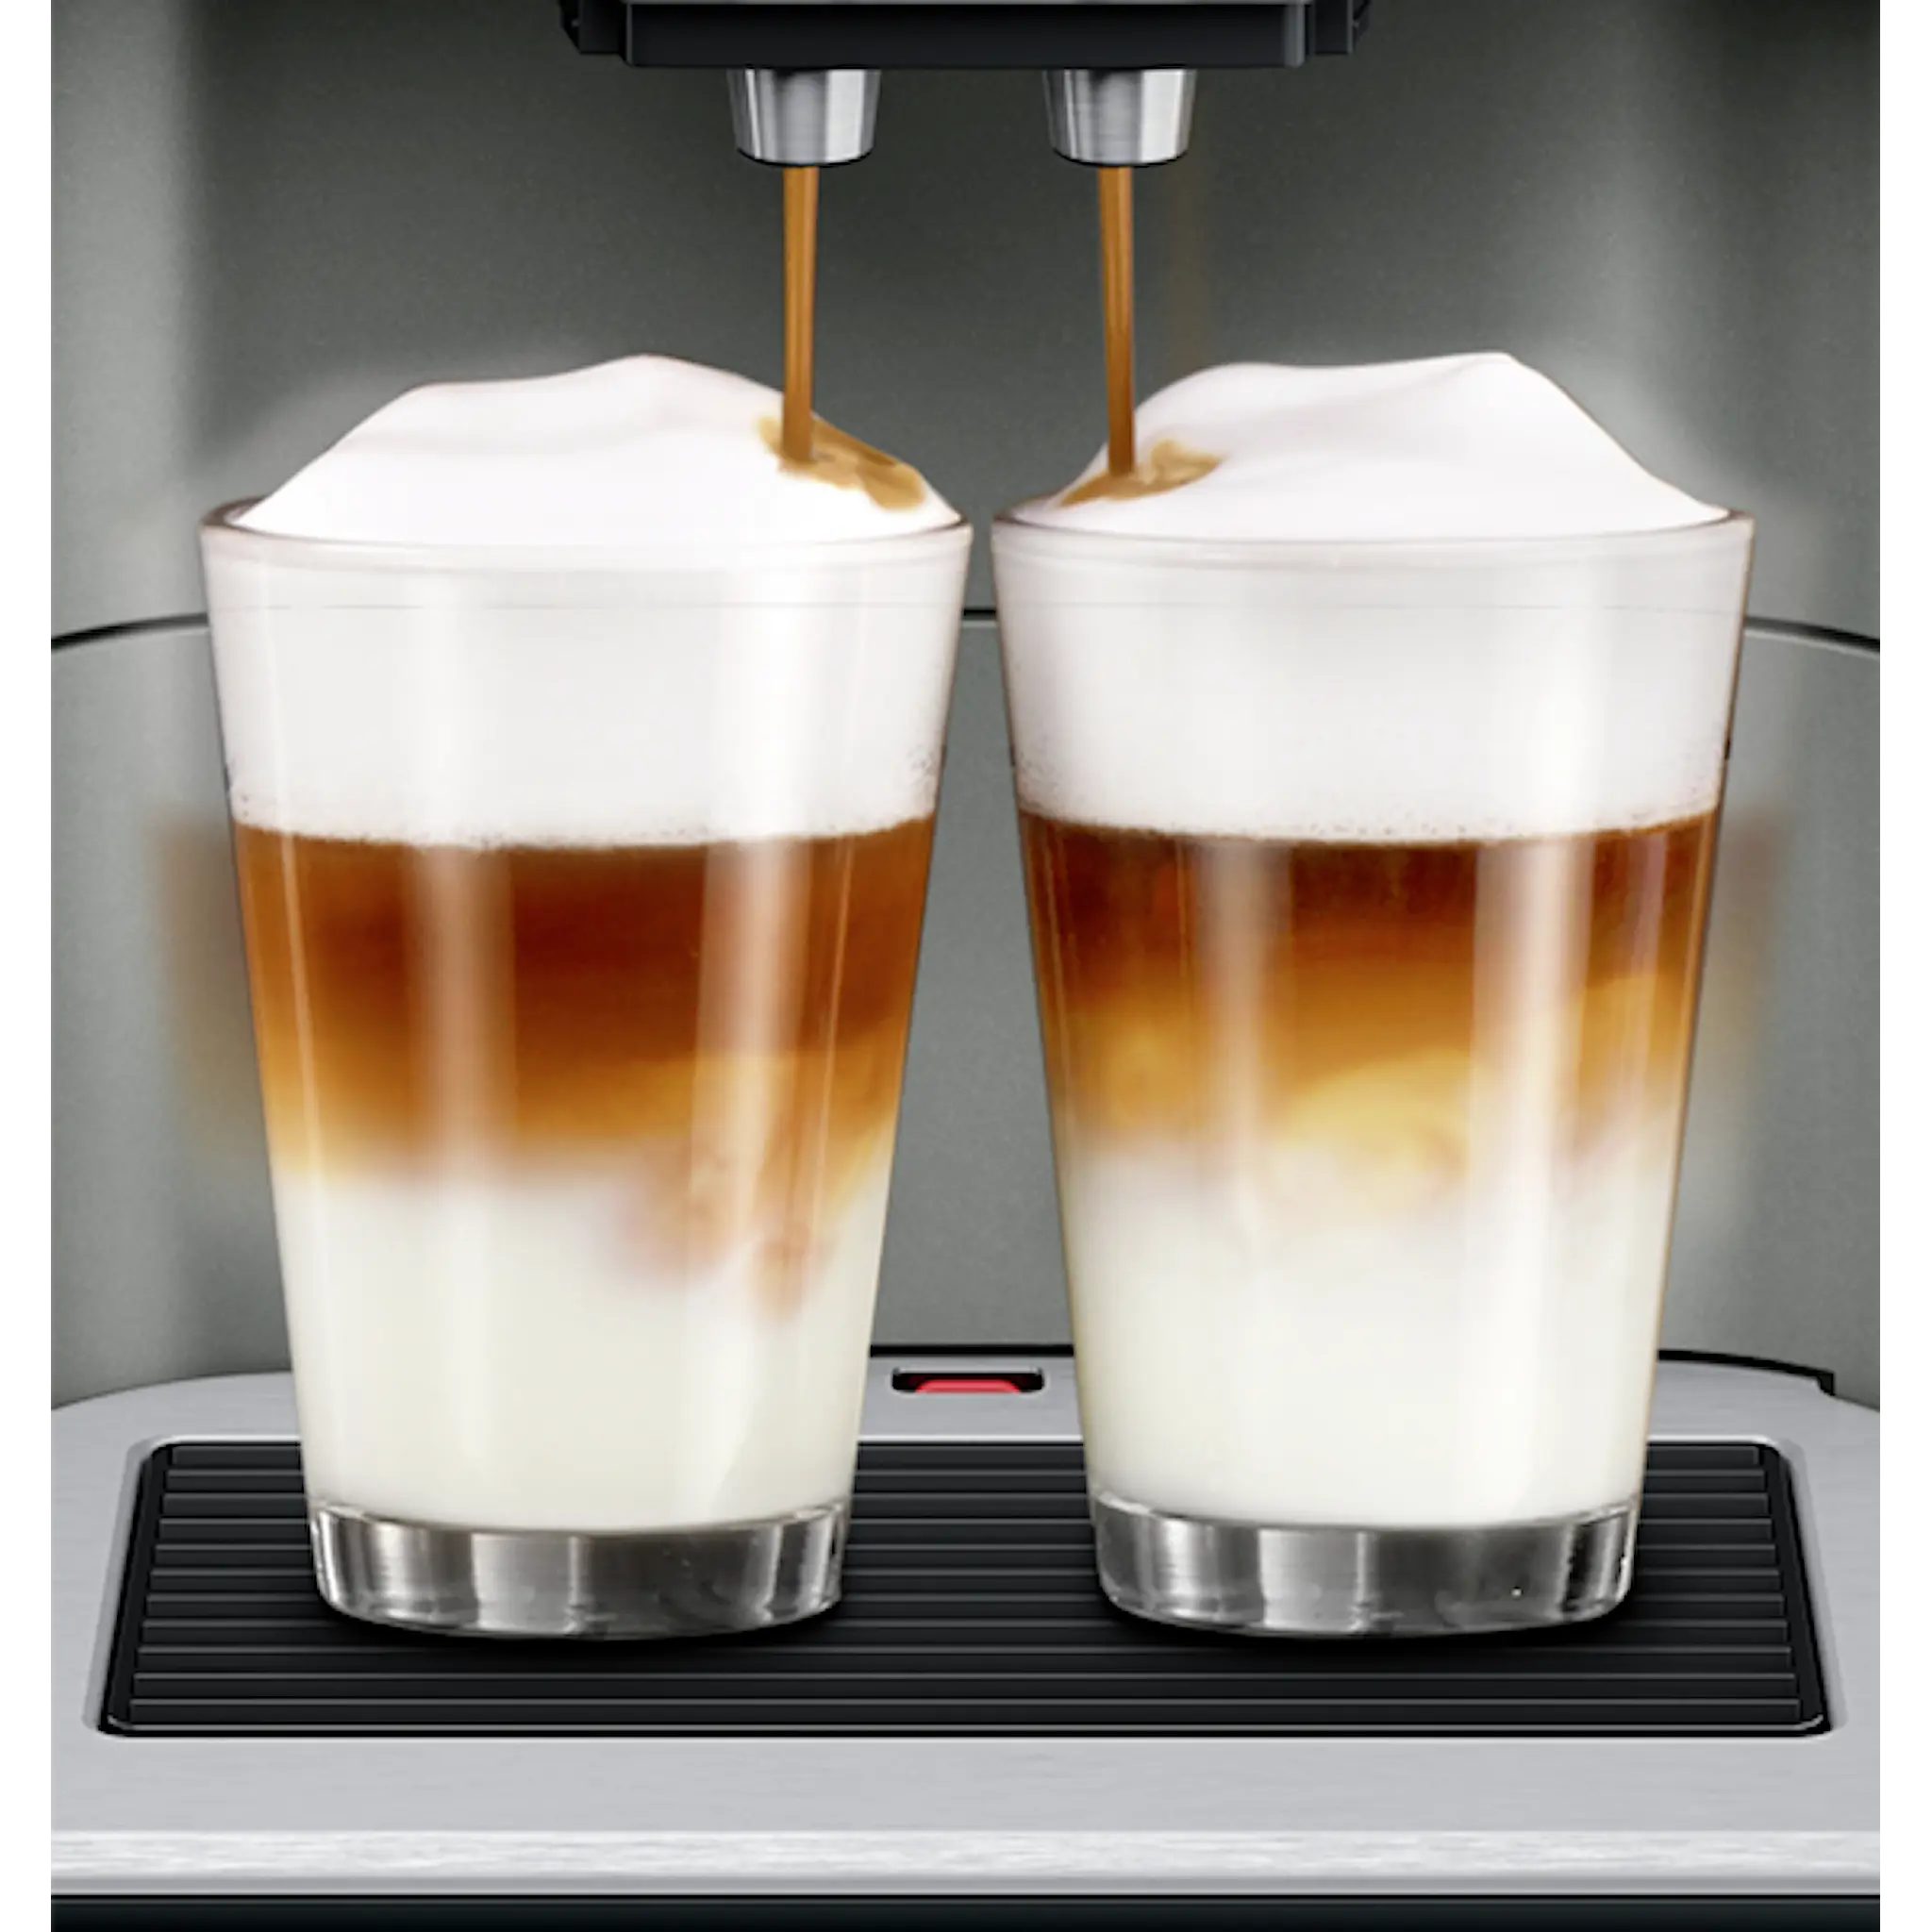 Siemens Automatisk Espresso/kaffemaskin EQ6 PLUS S500 Morning Haze